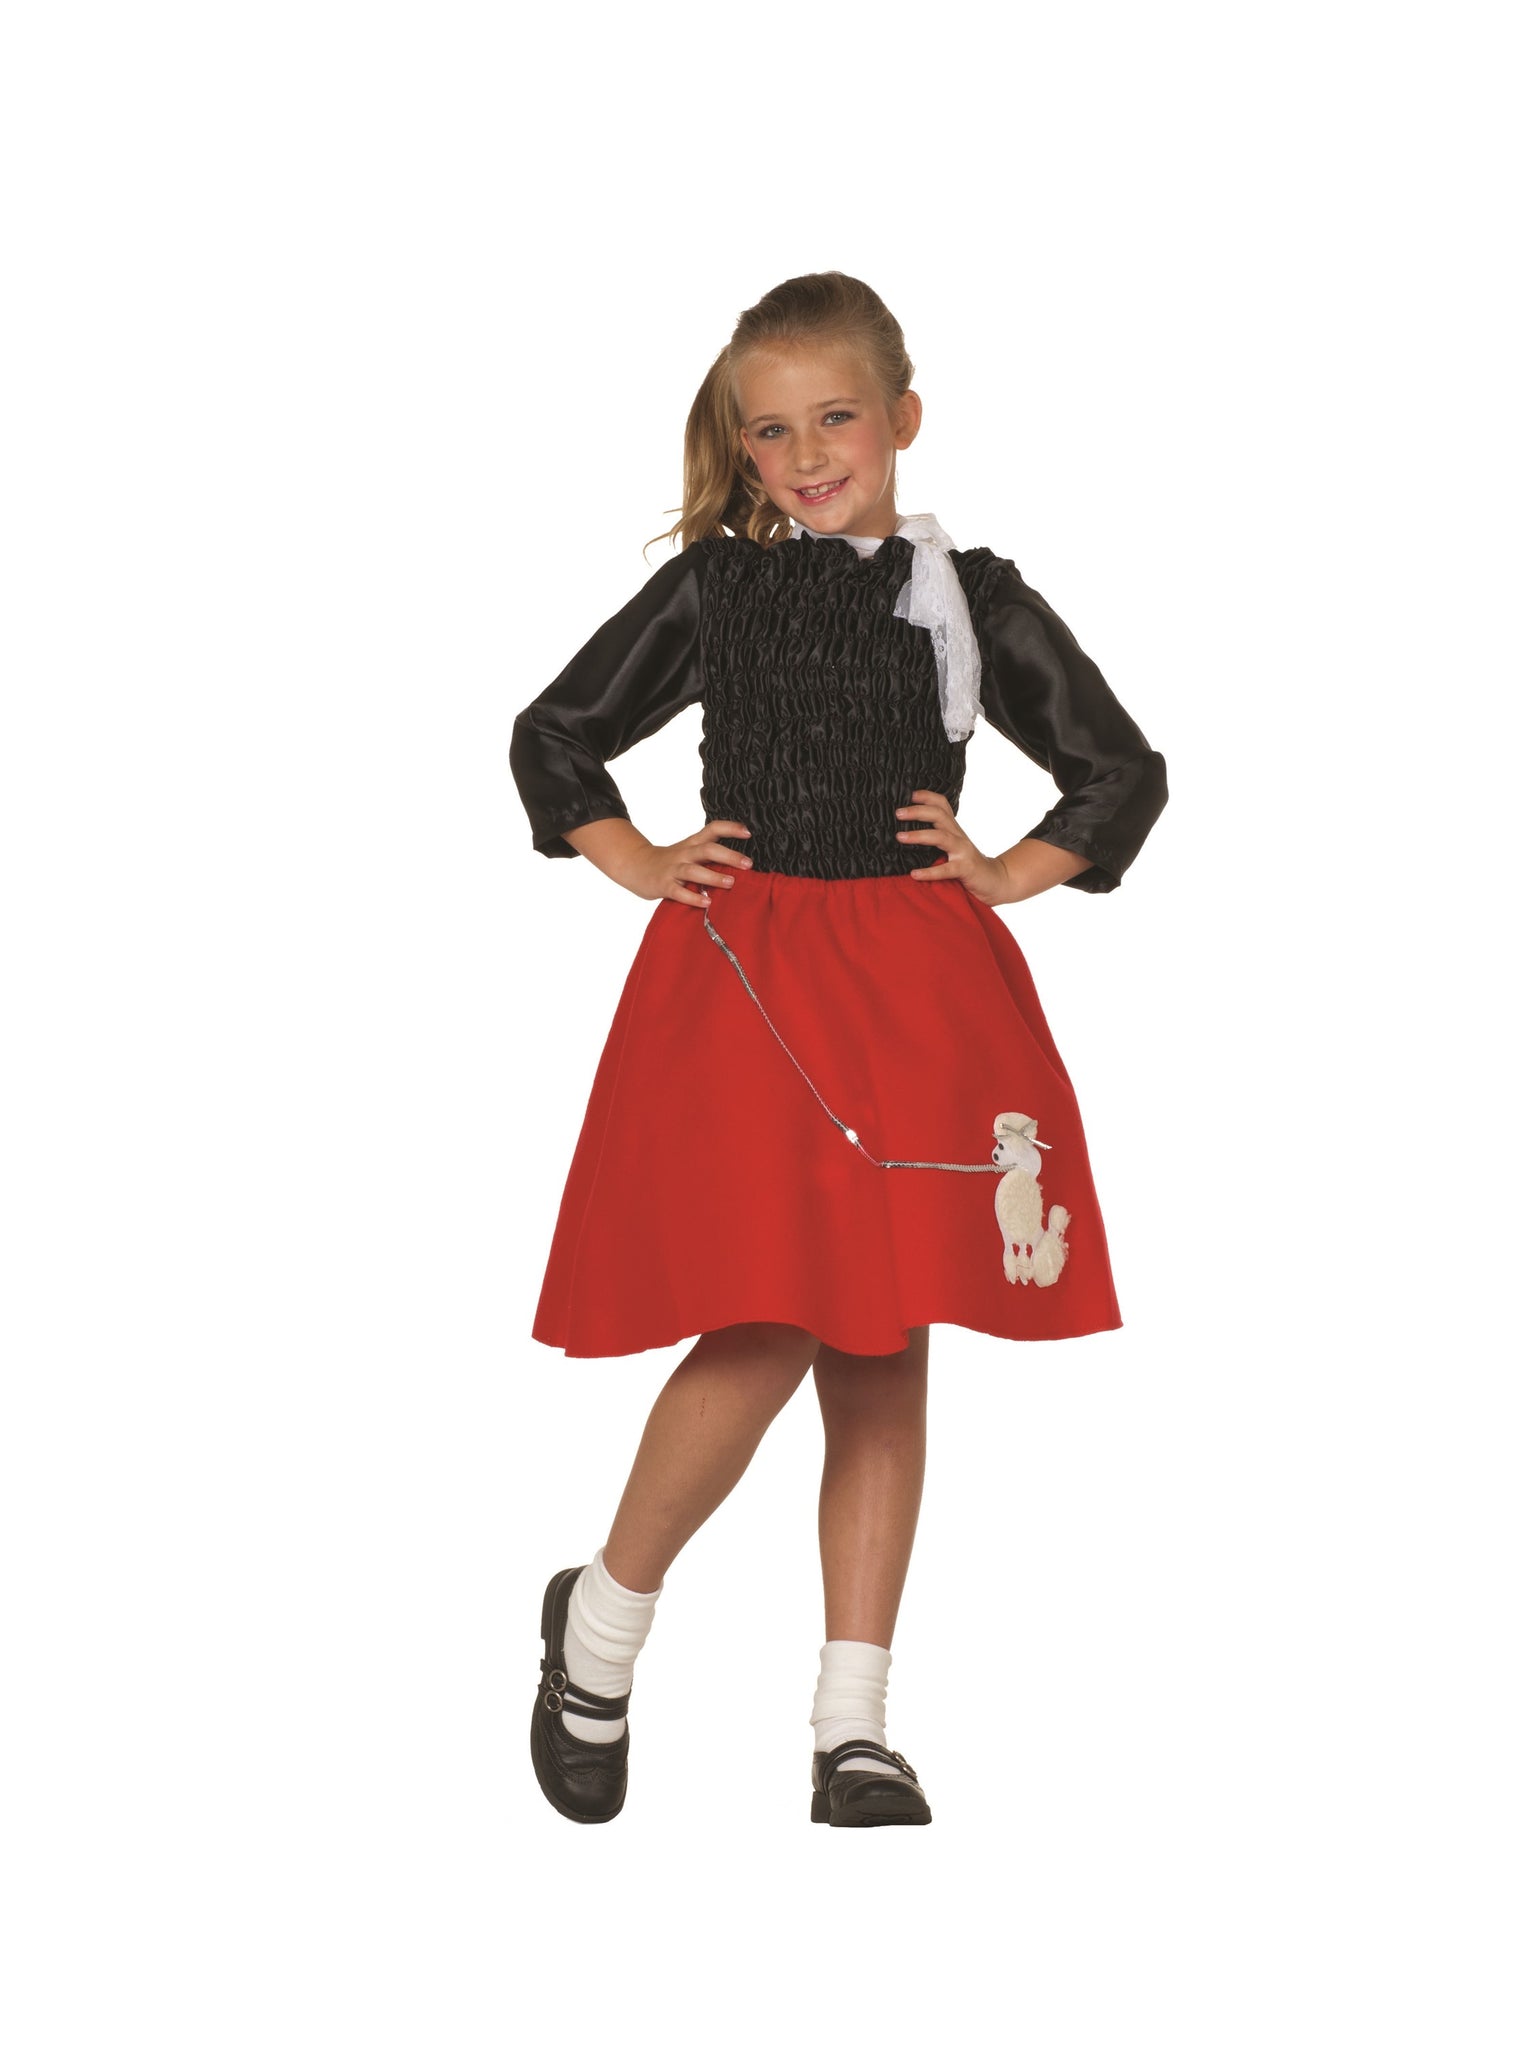 C. Poodle Skirt Red Lg